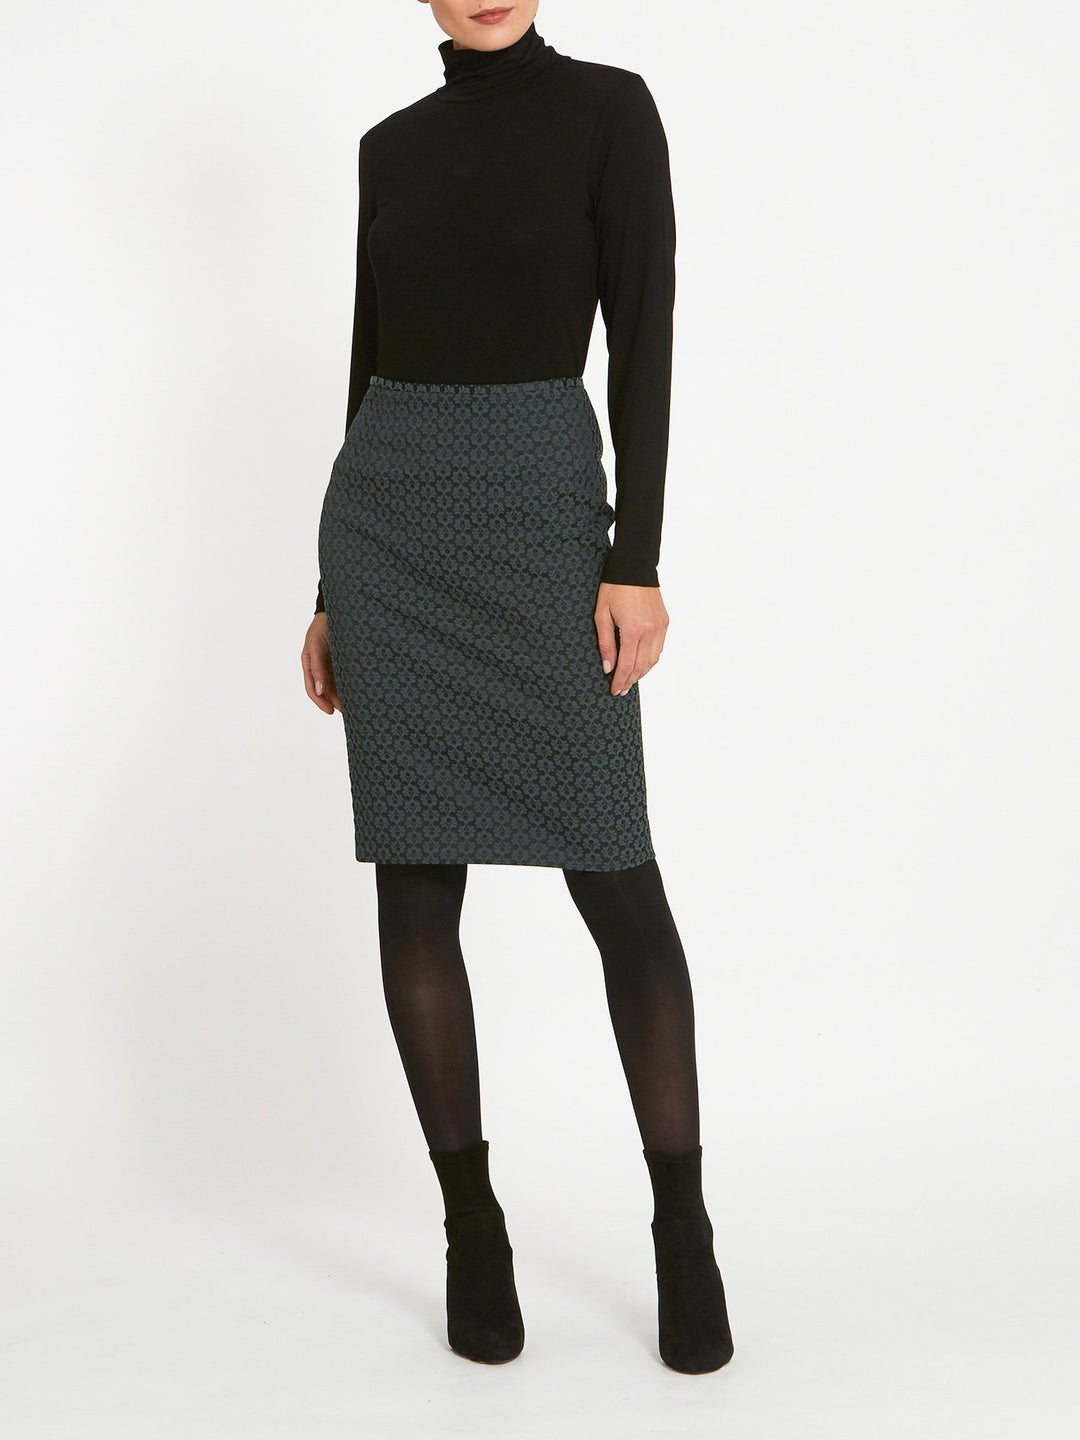 Beth Grey Jacquard Skirt